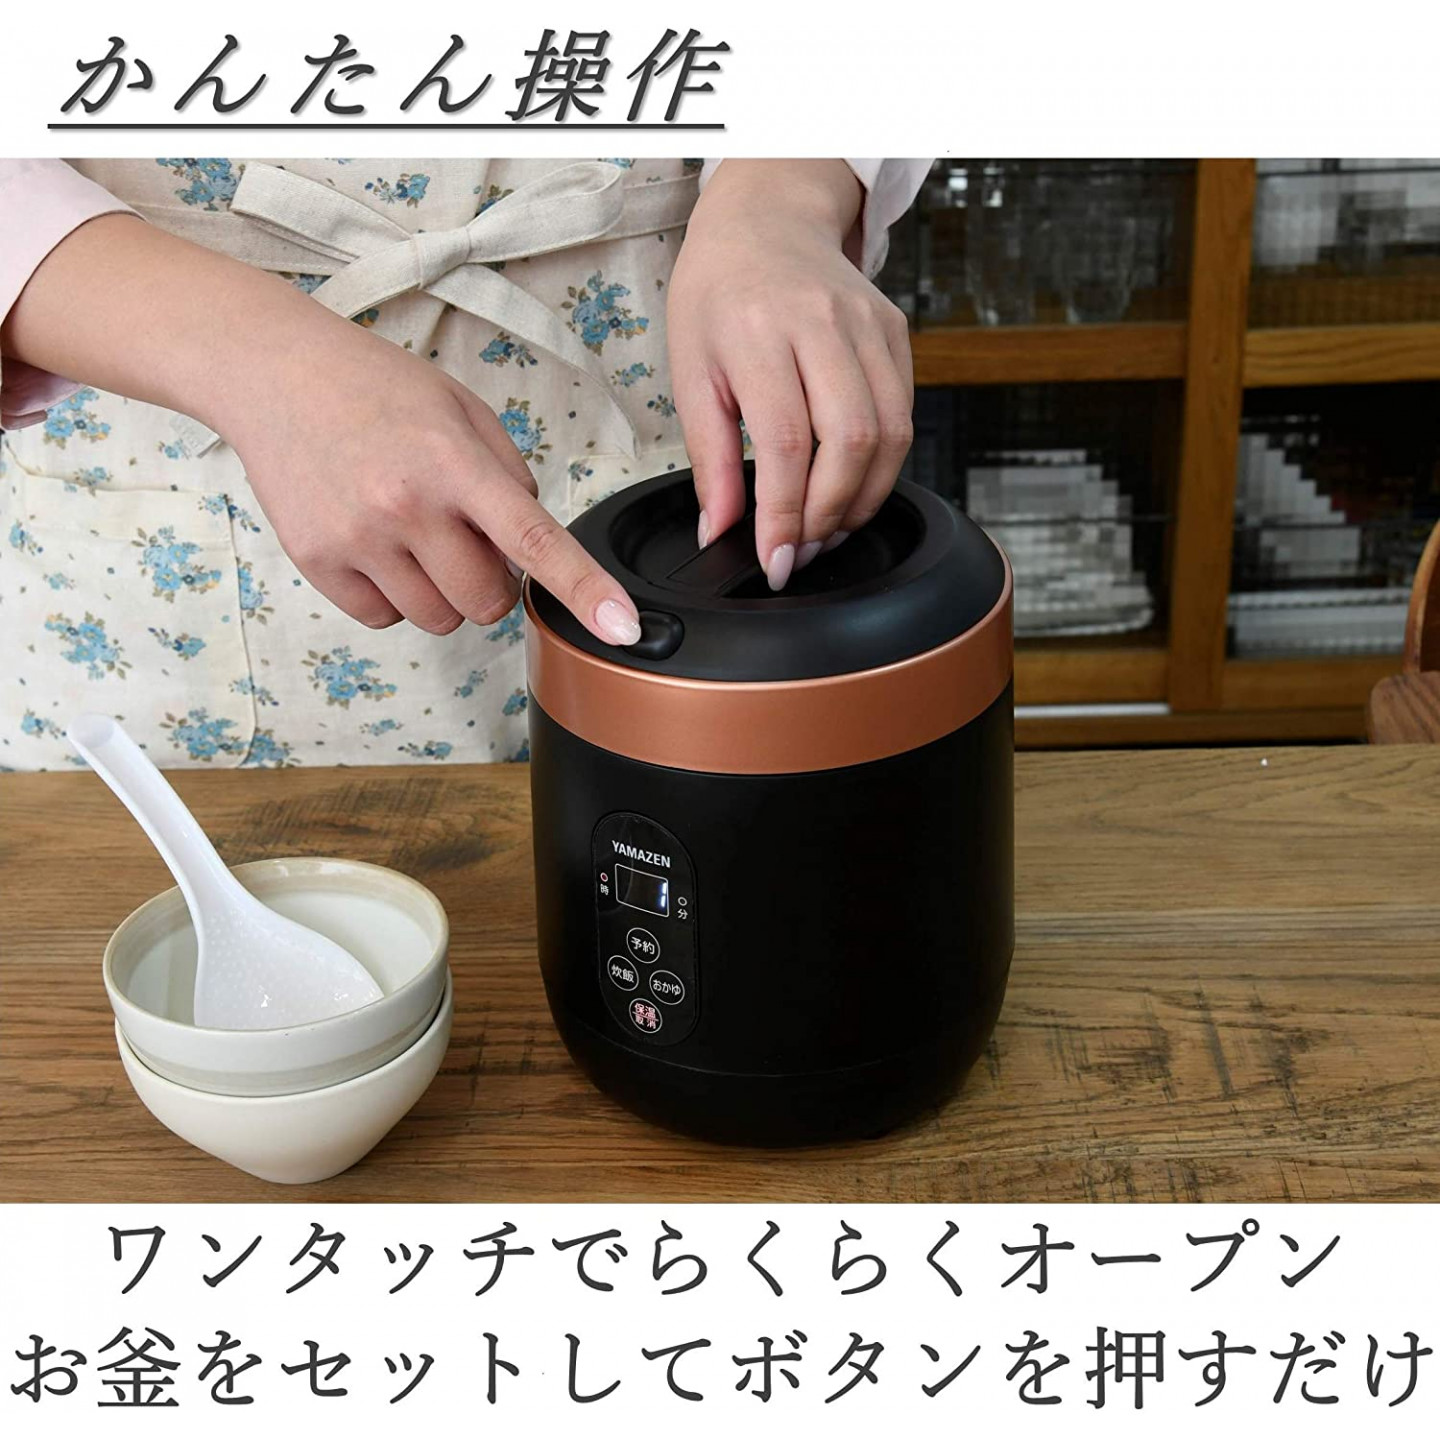 YAMAZEN - Mini Rice Cooker